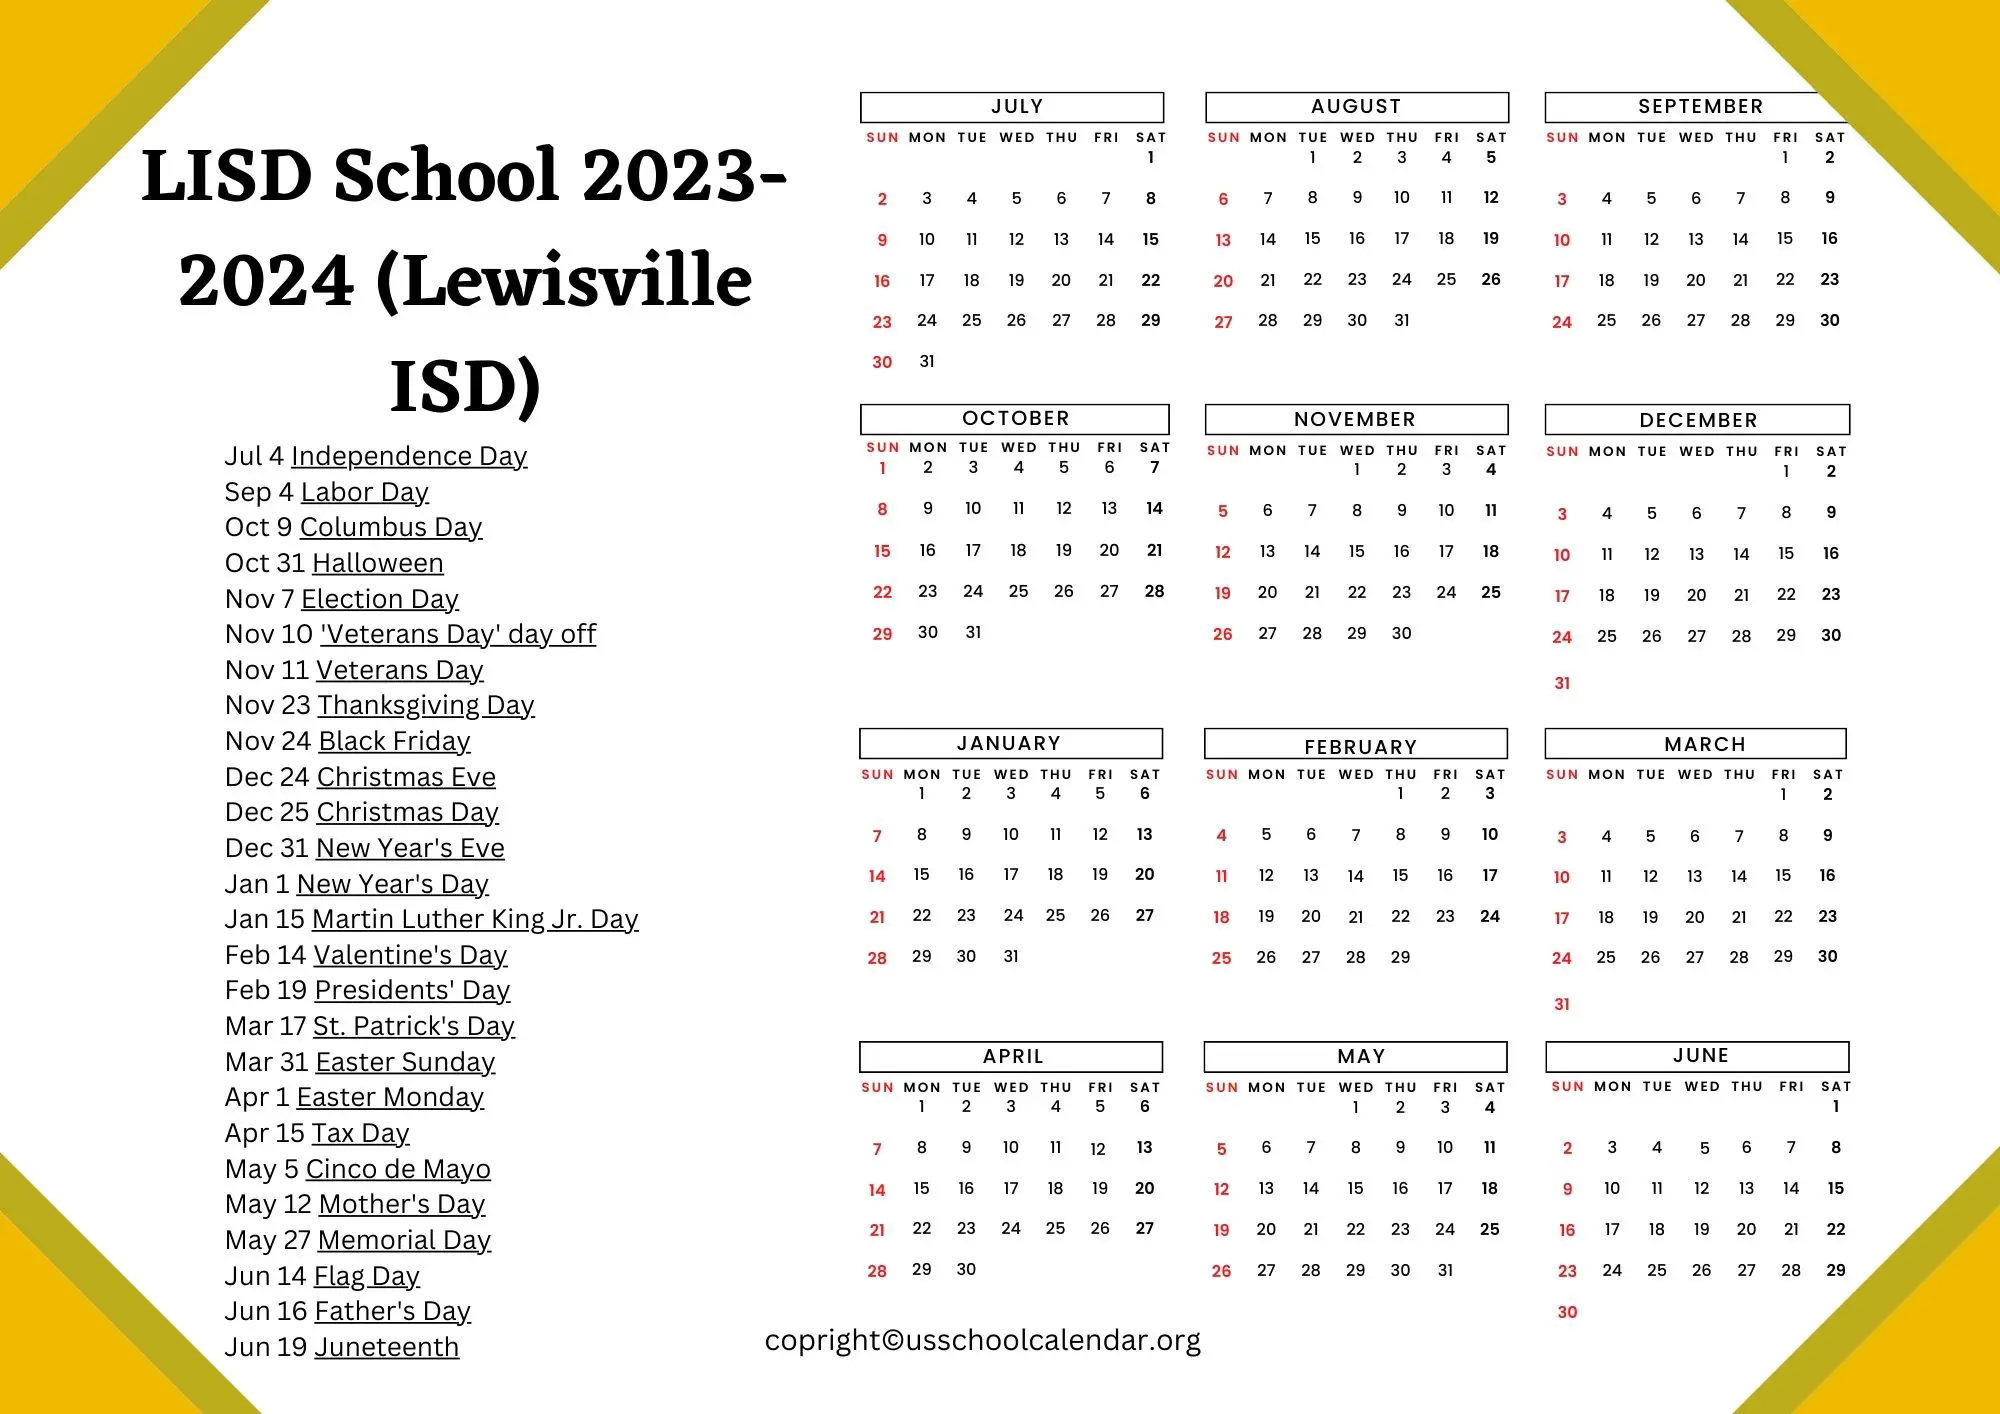 LISD School Calendar with Holidays 20232024 [Lewisville ISD]